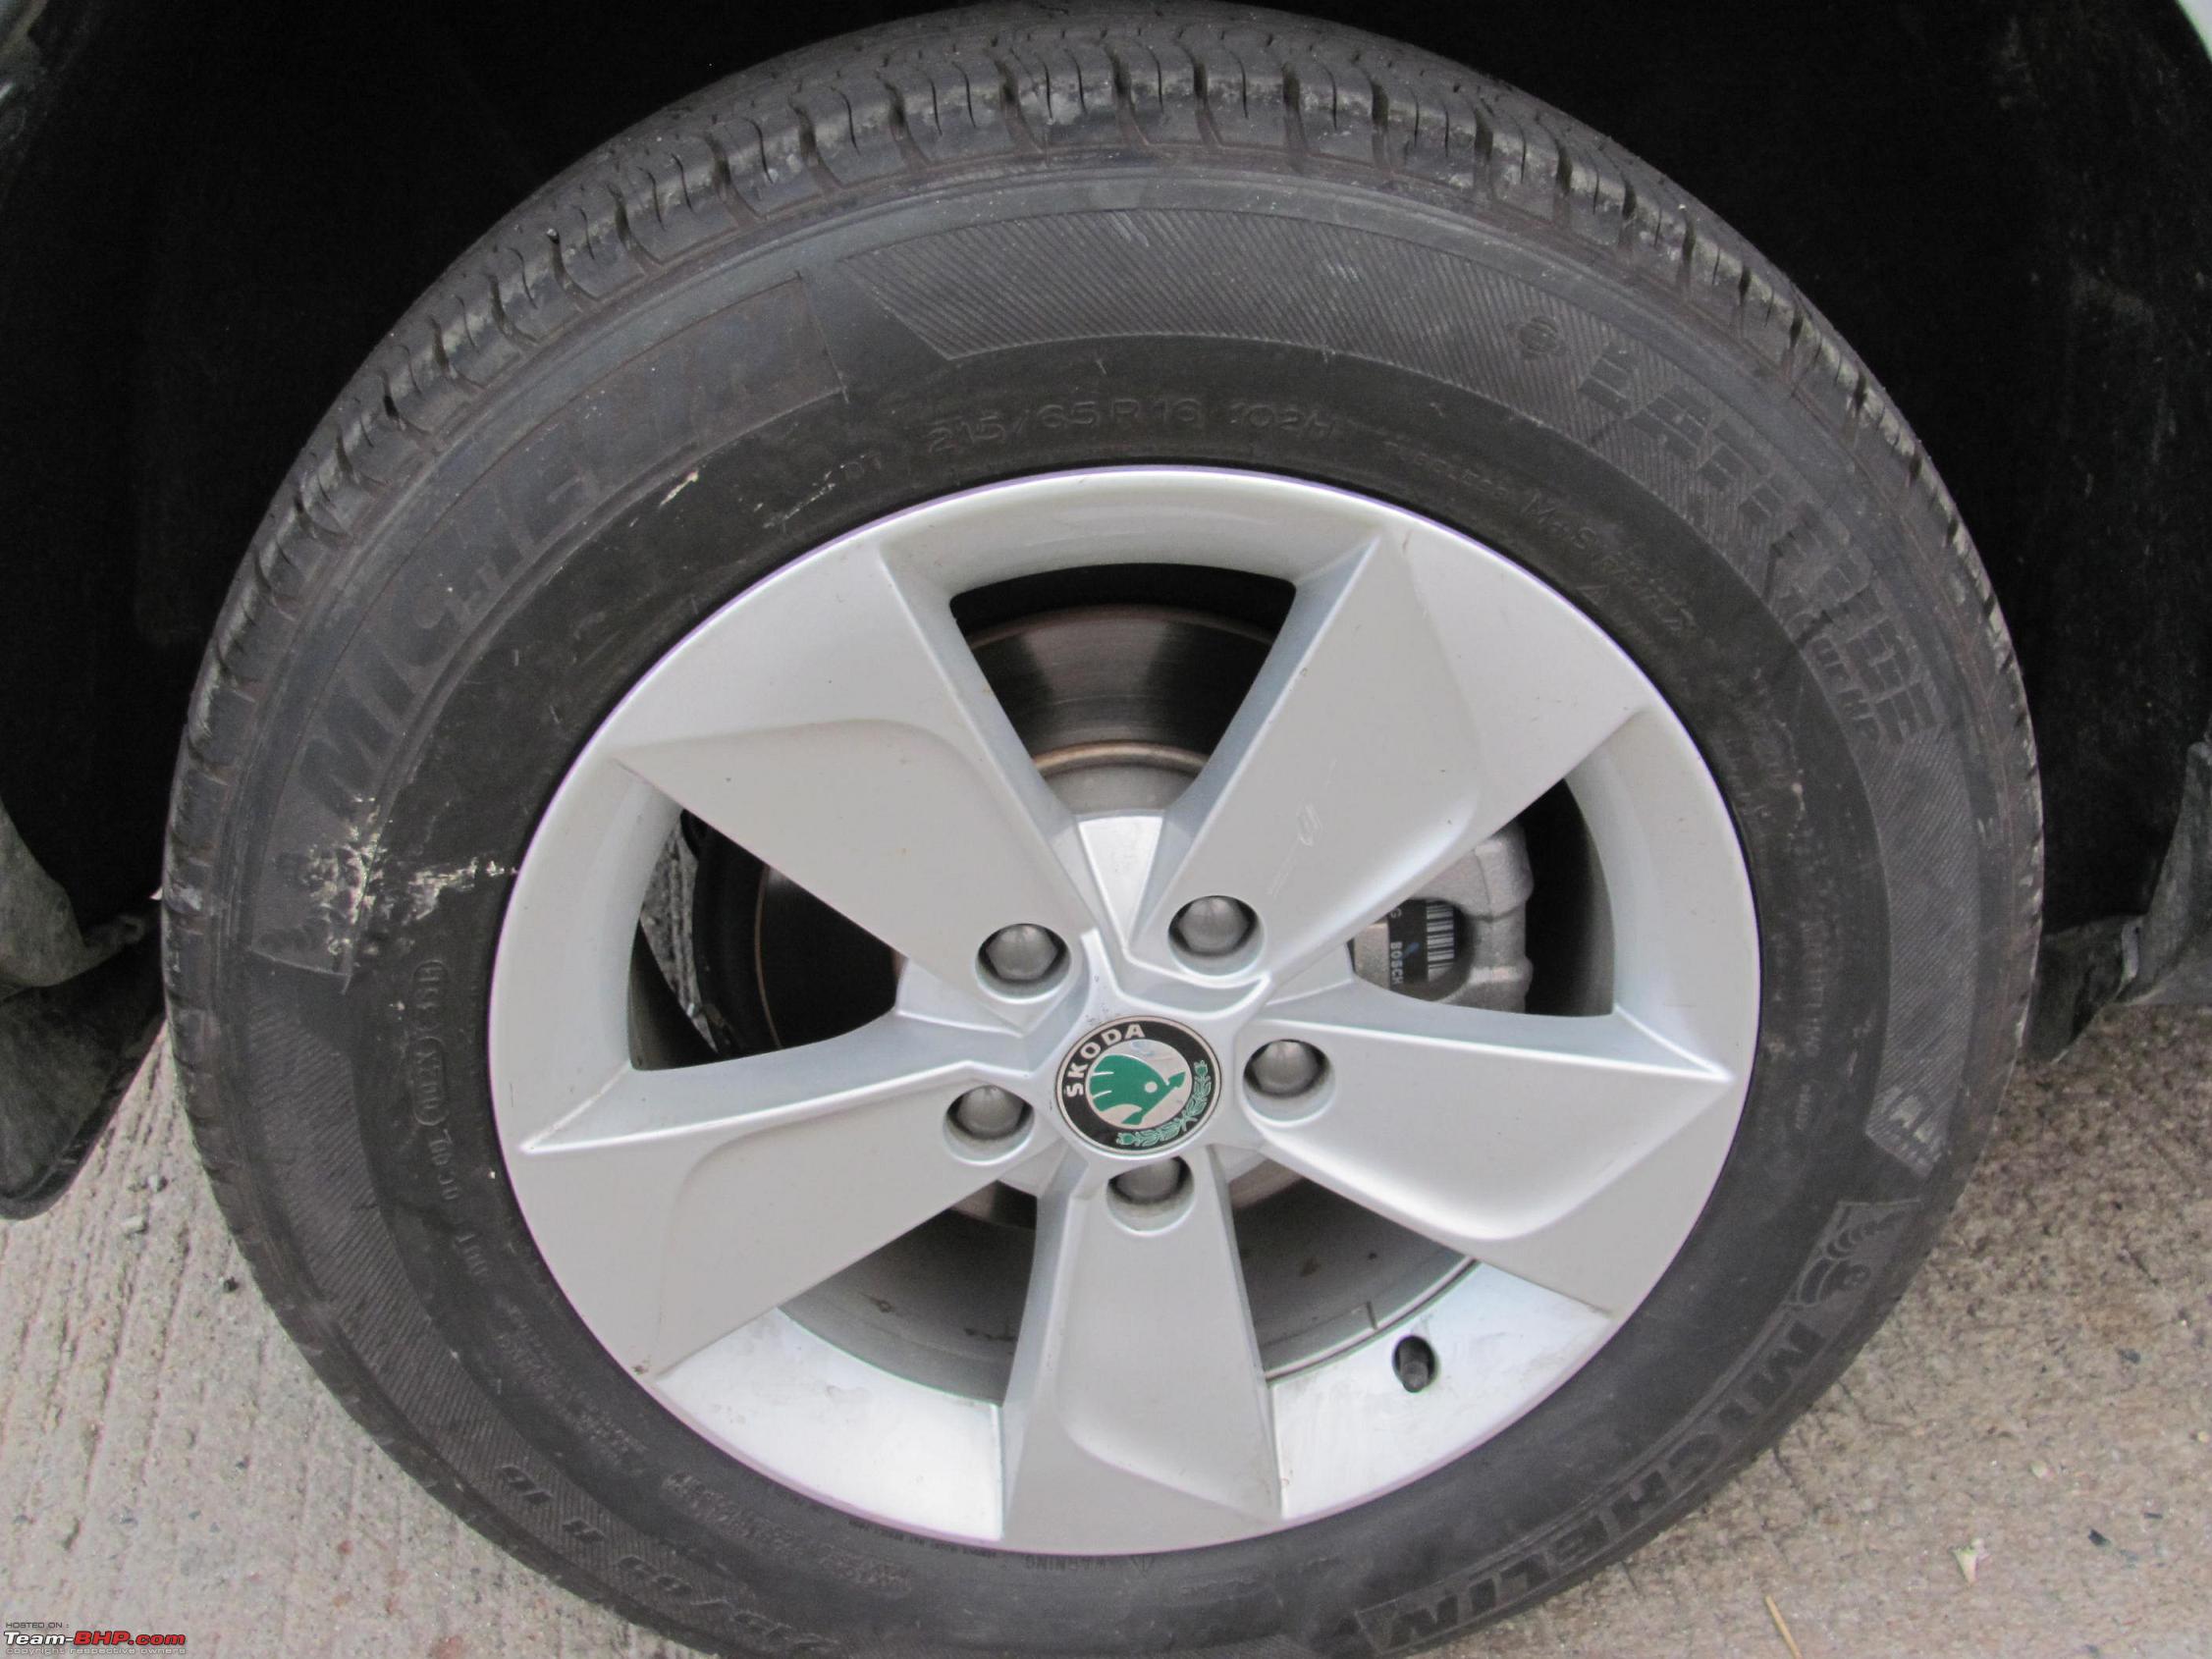 Skoda Yeti : Tyre & wheel upgrade thread - Page 10 - Team-BHP